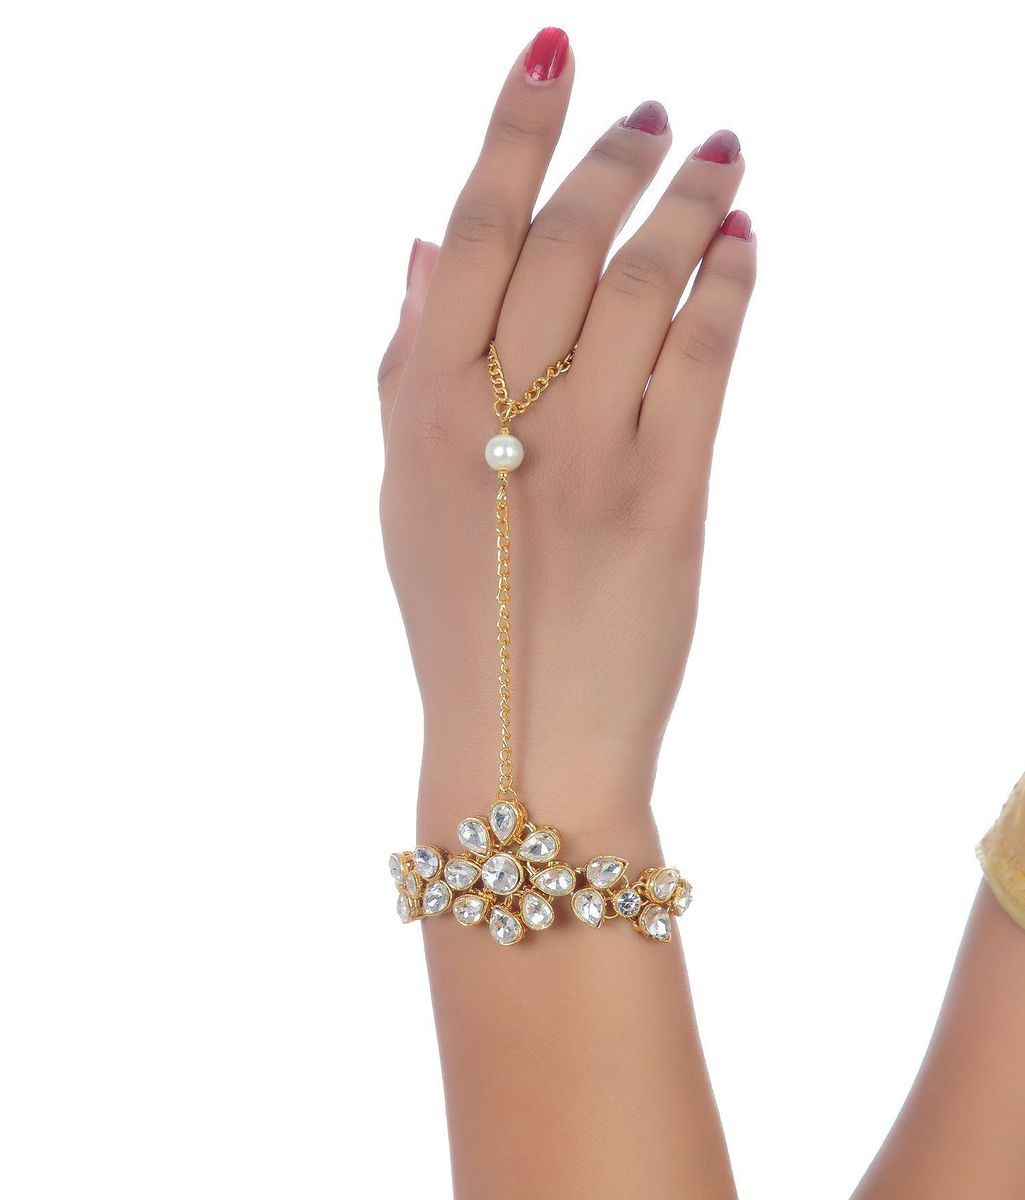 Amazon.com: Ring Bracelet Hand Chain